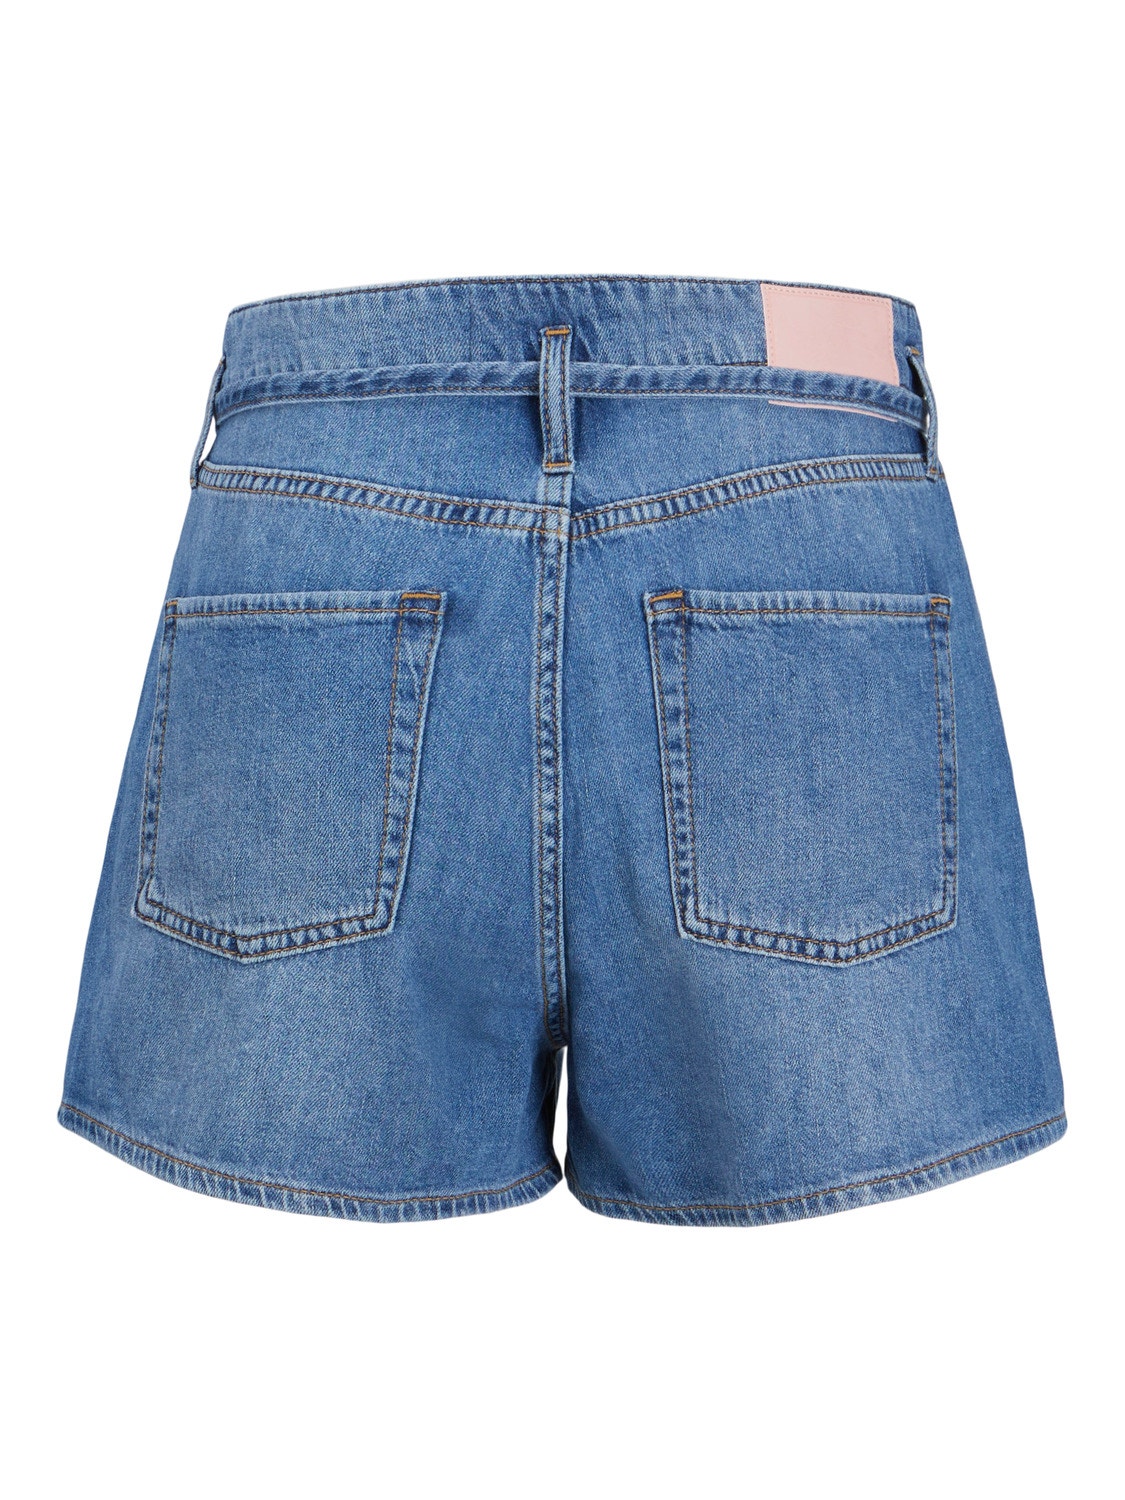 JJXX JXPIXI Jeans Shorts -Light Blue Denim - 12254583